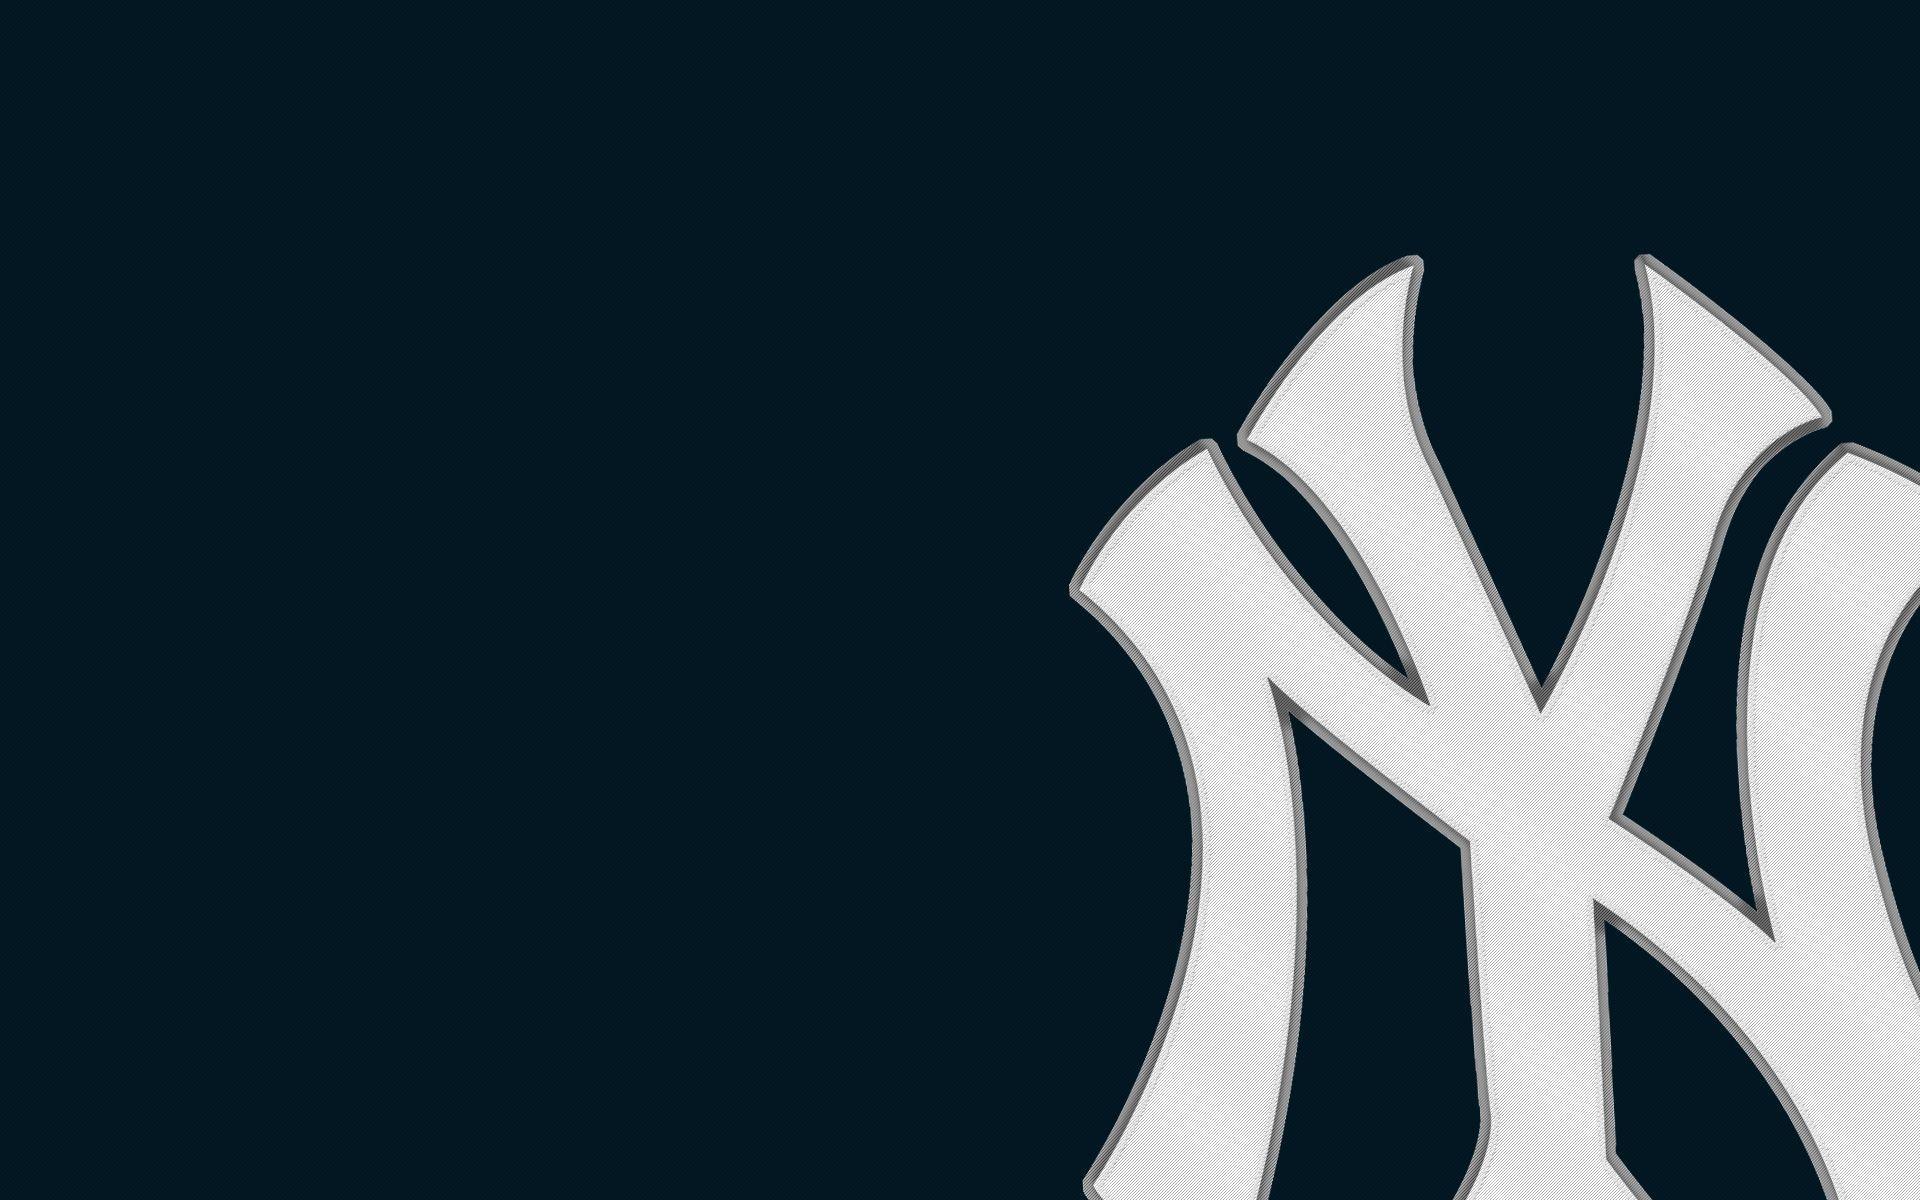 New York Yankees Wallpaper Archives.com